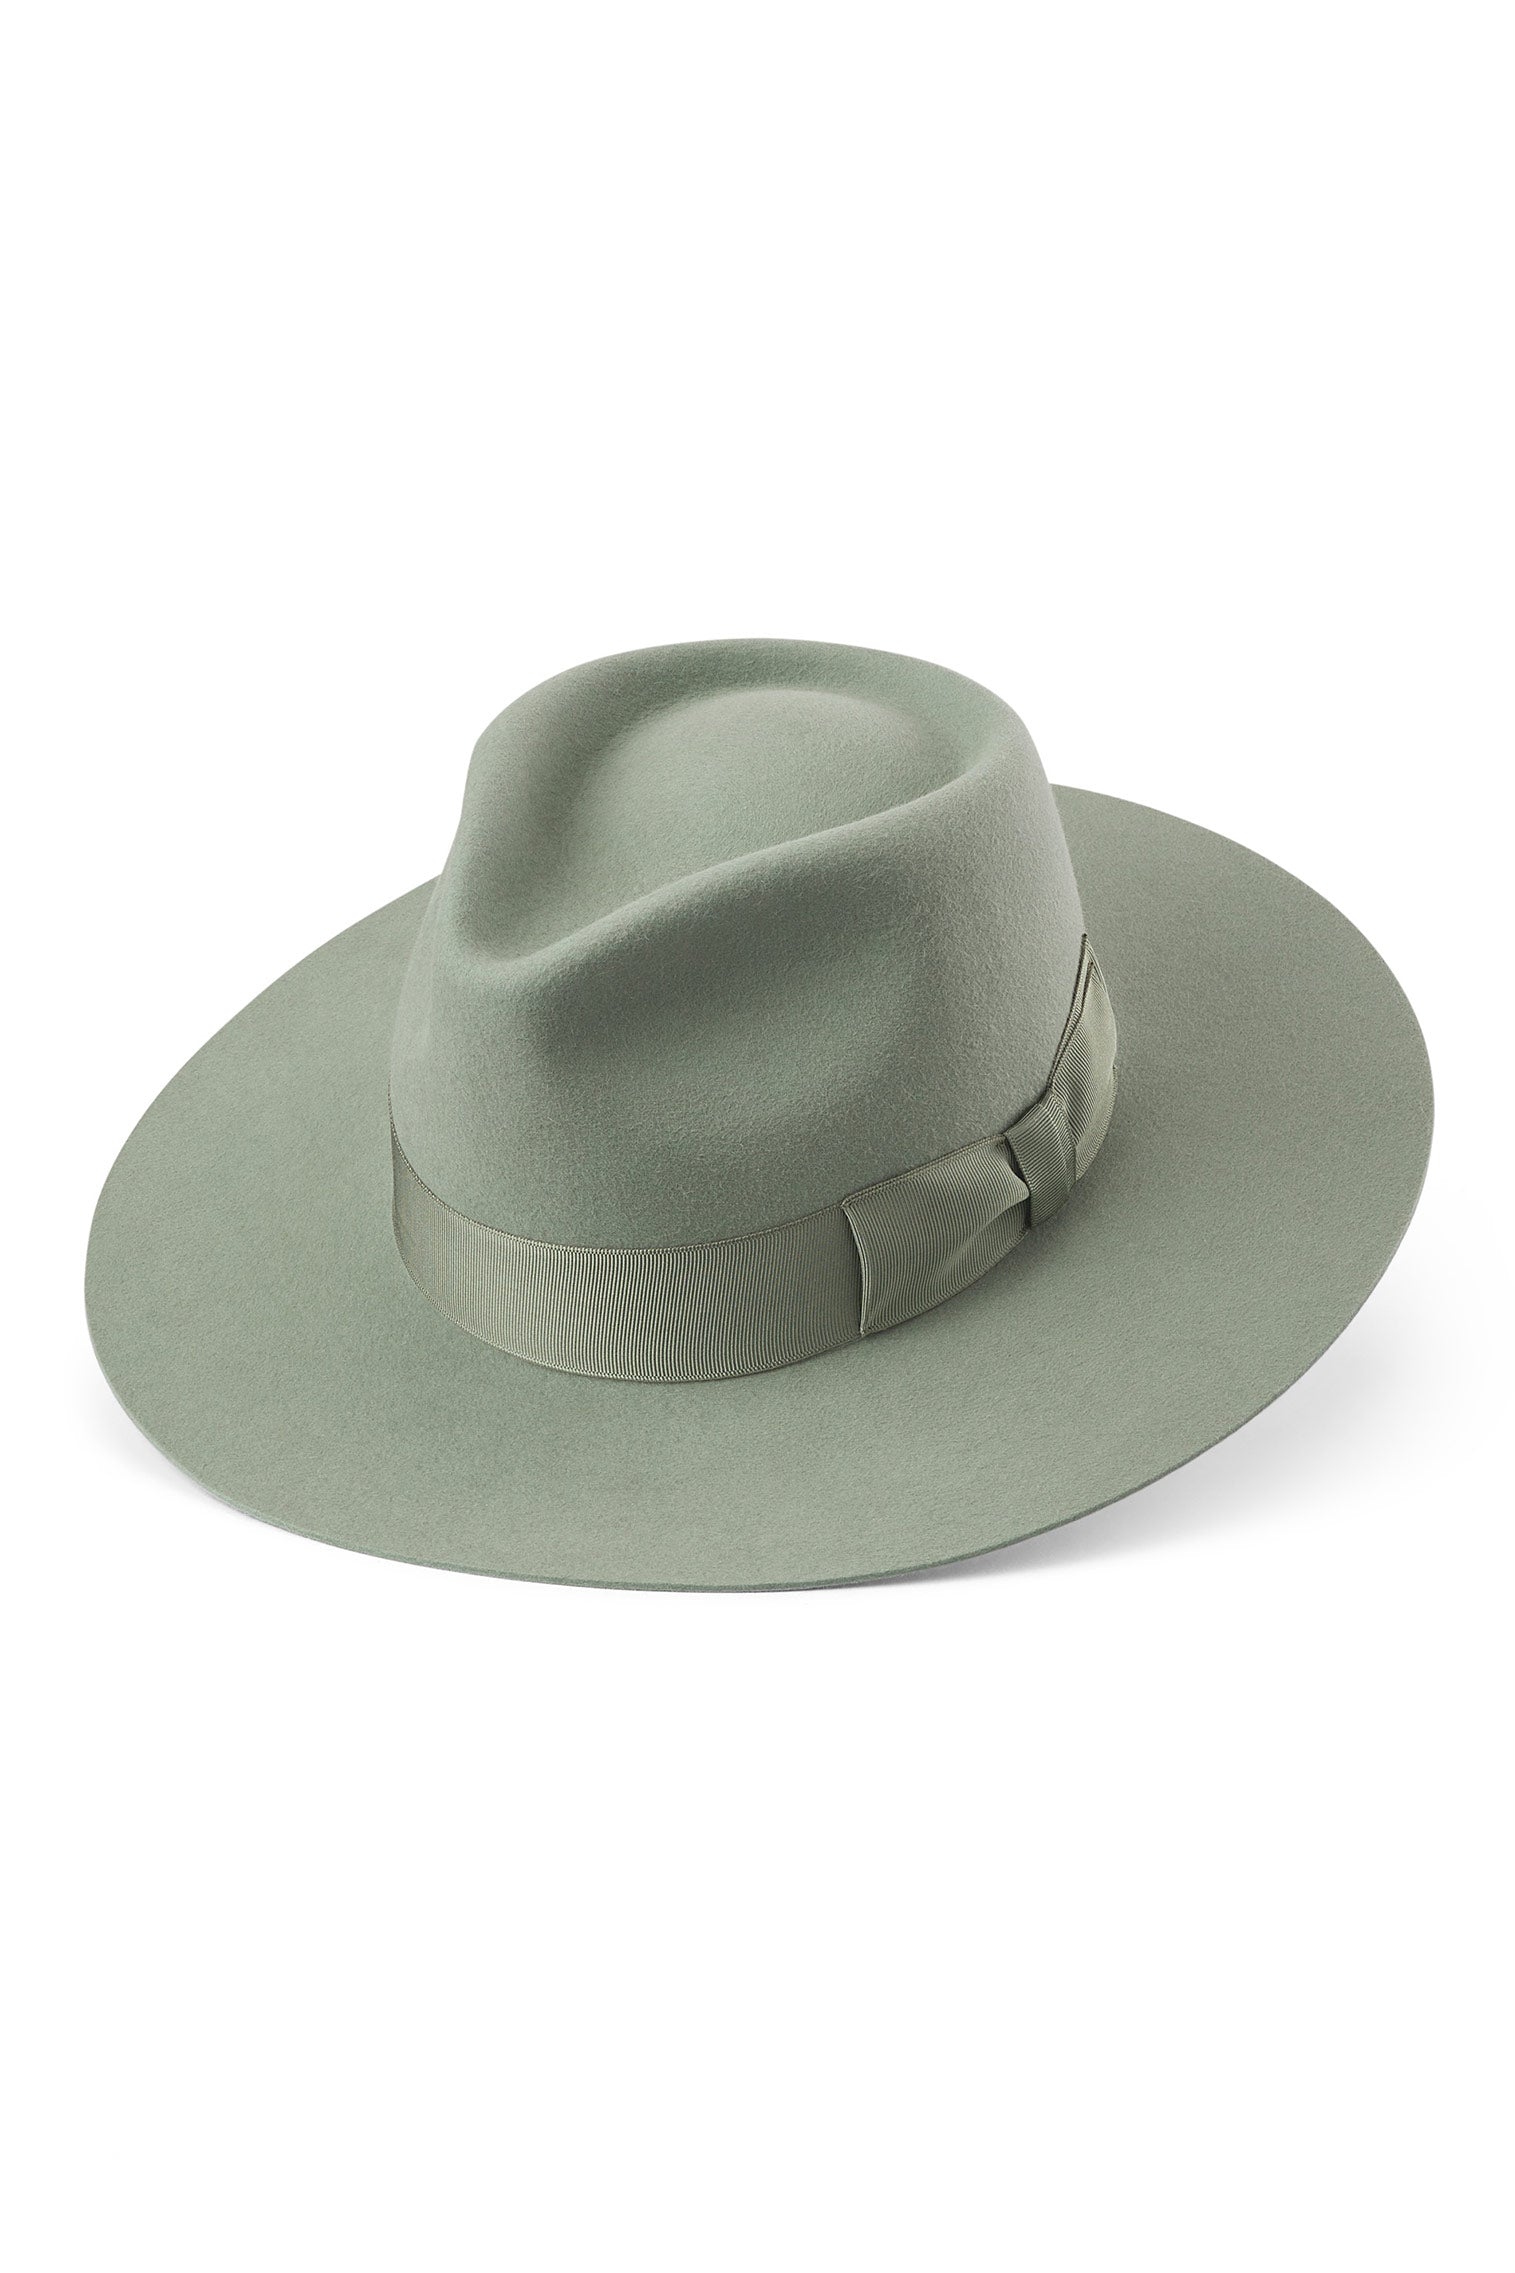 Toni Green Flat-Brim Fedora - Hats for Tall People - Lock & Co. Hatters London UK